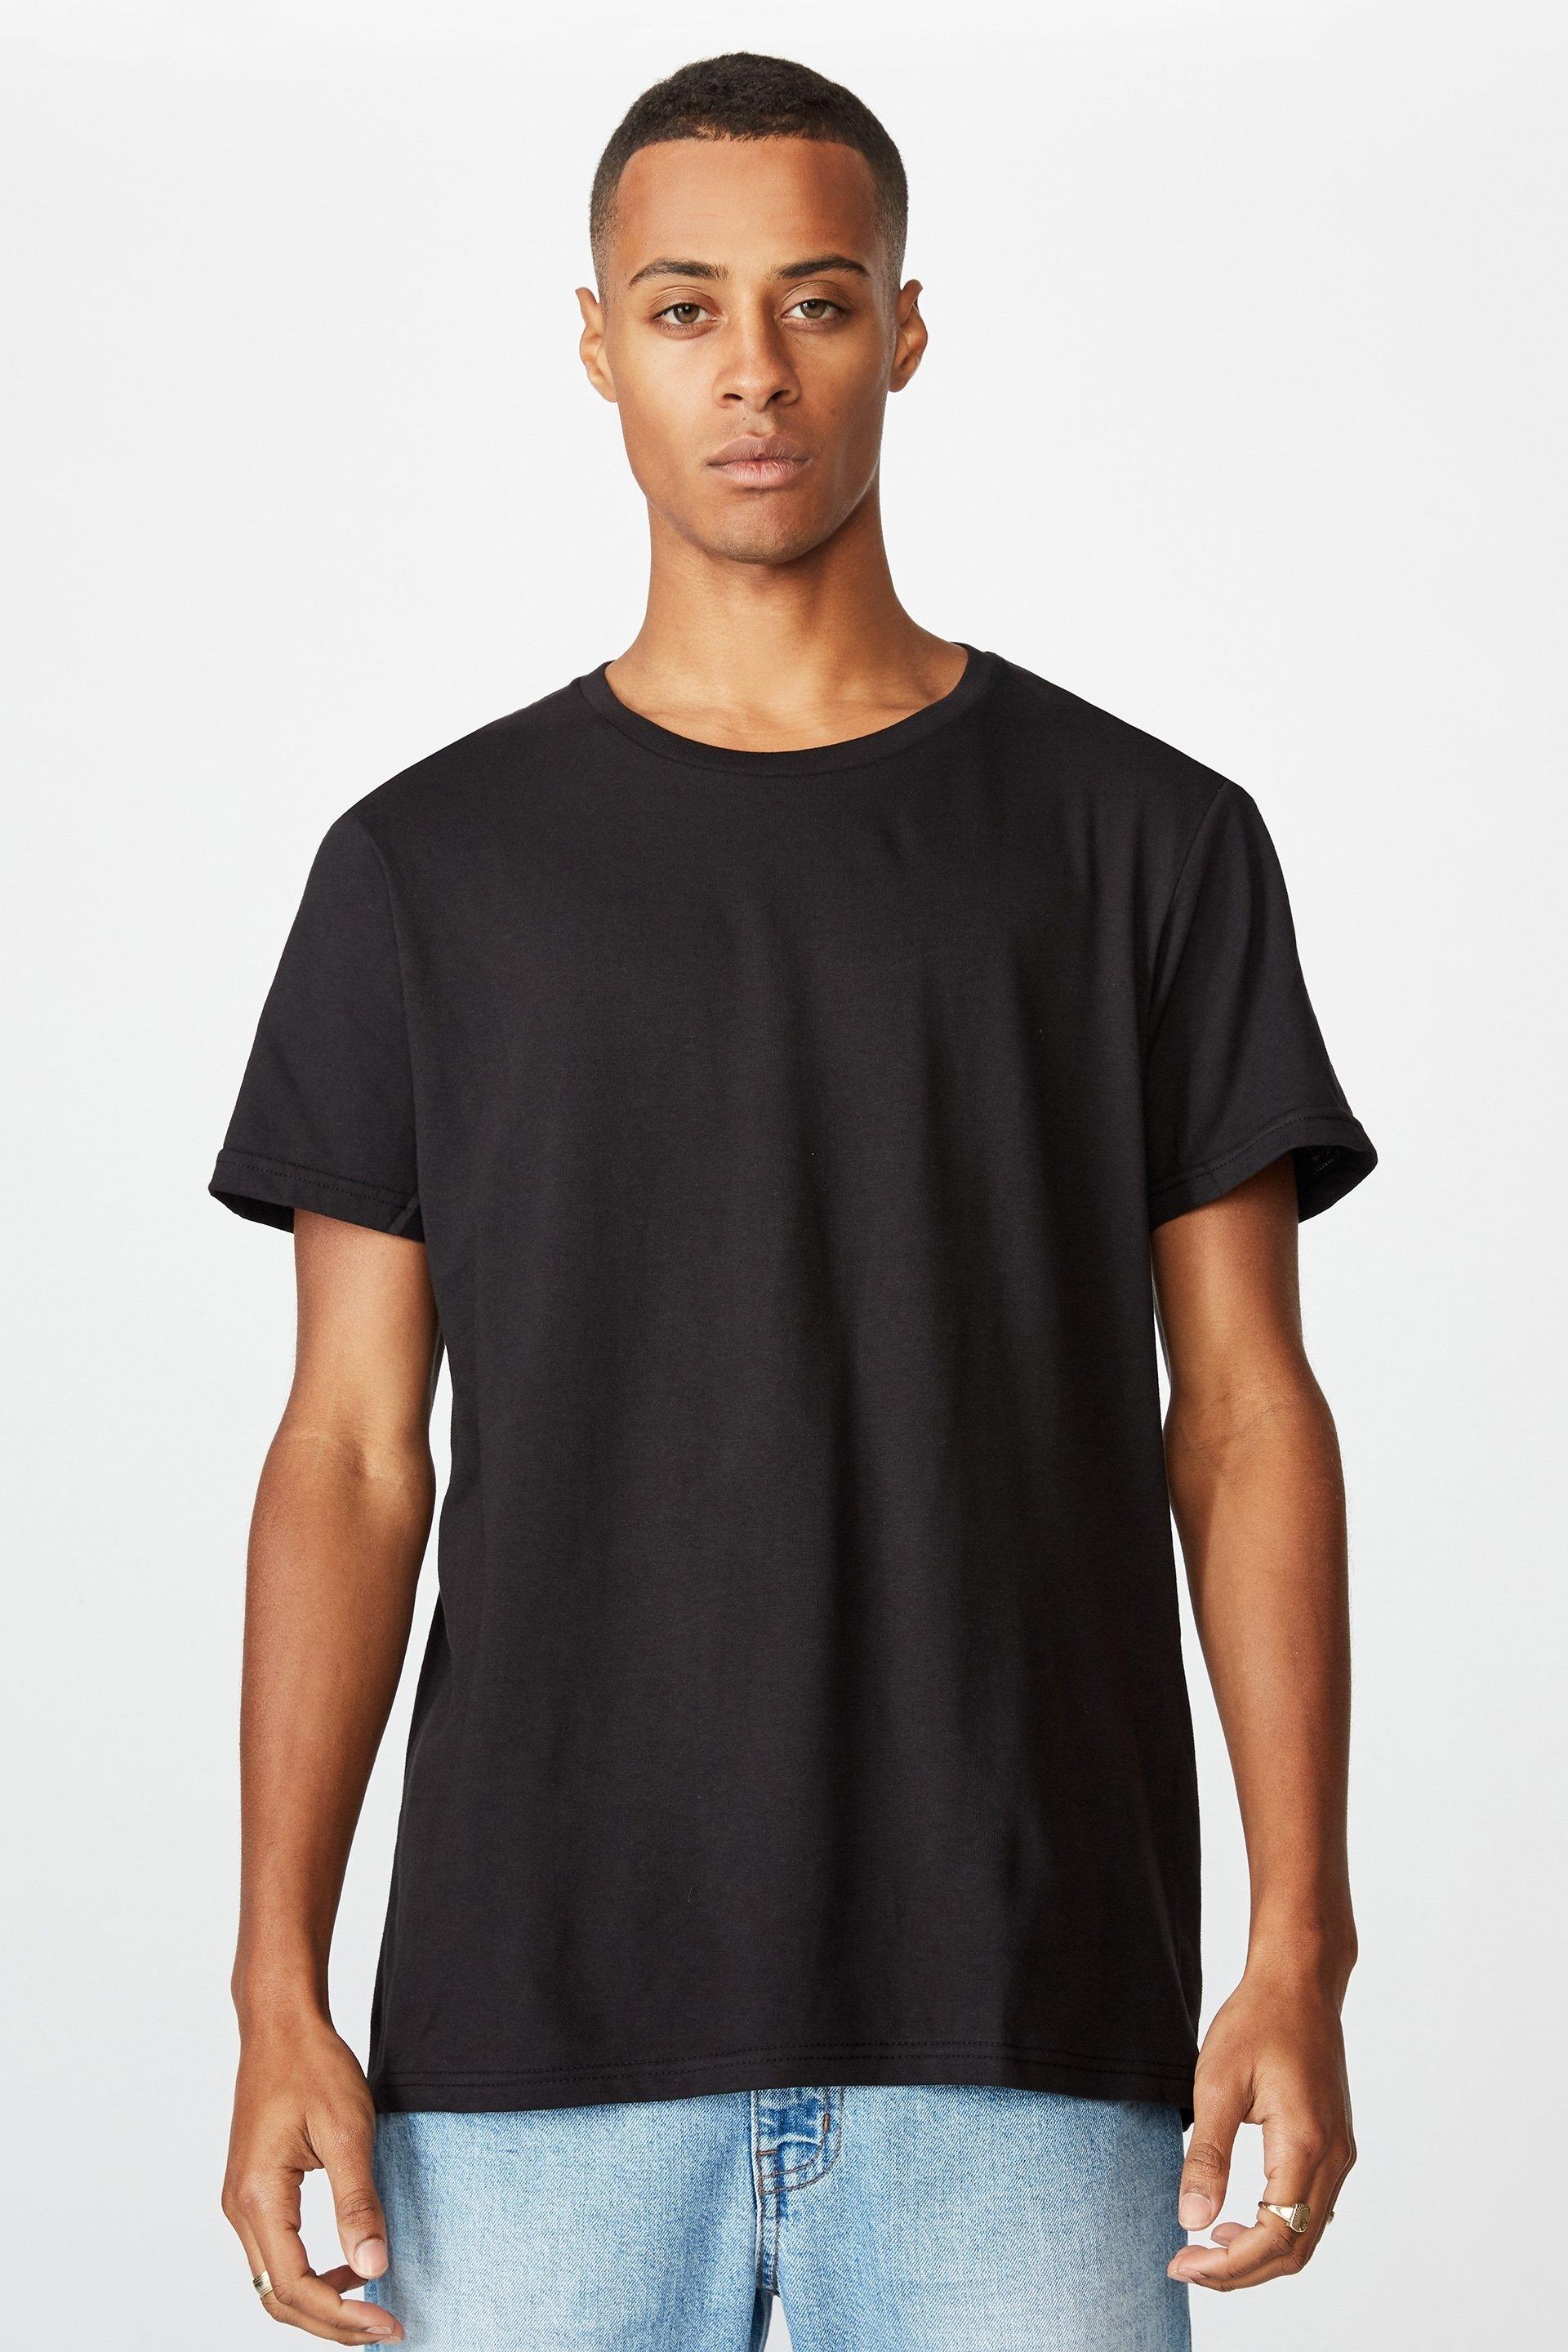 Essential crew t-shirt - black Cotton On T-Shirts & Vests | Superbalist.com